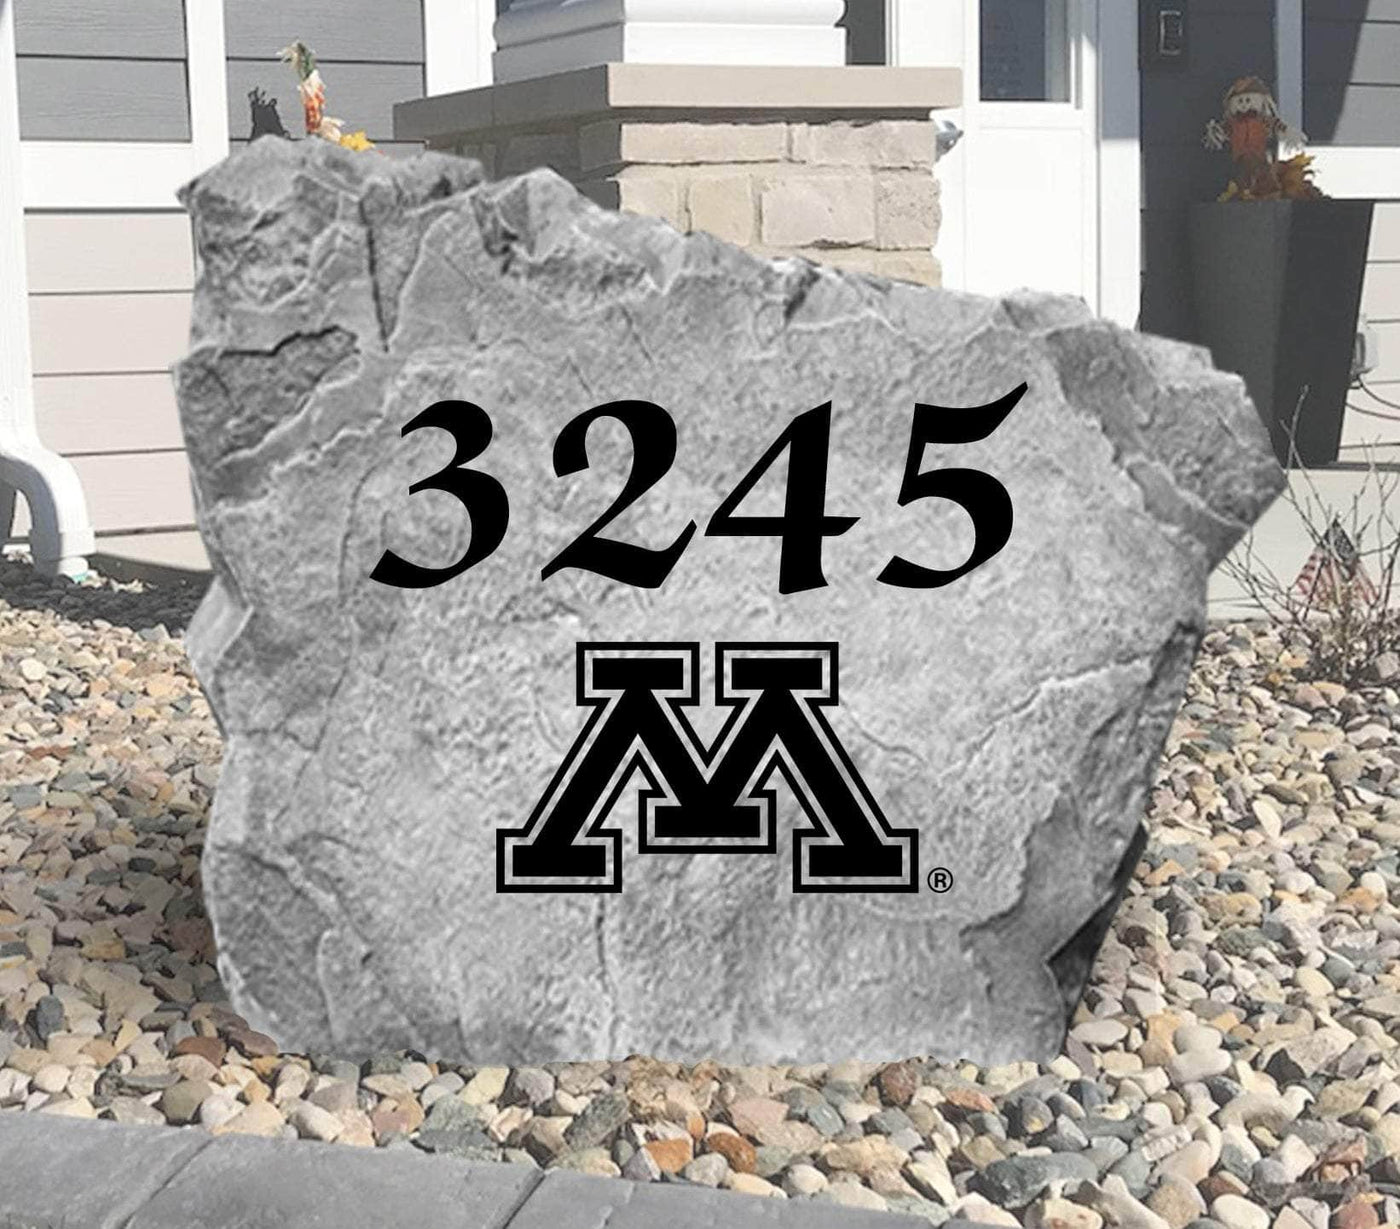 University of Minnesota Address Stone